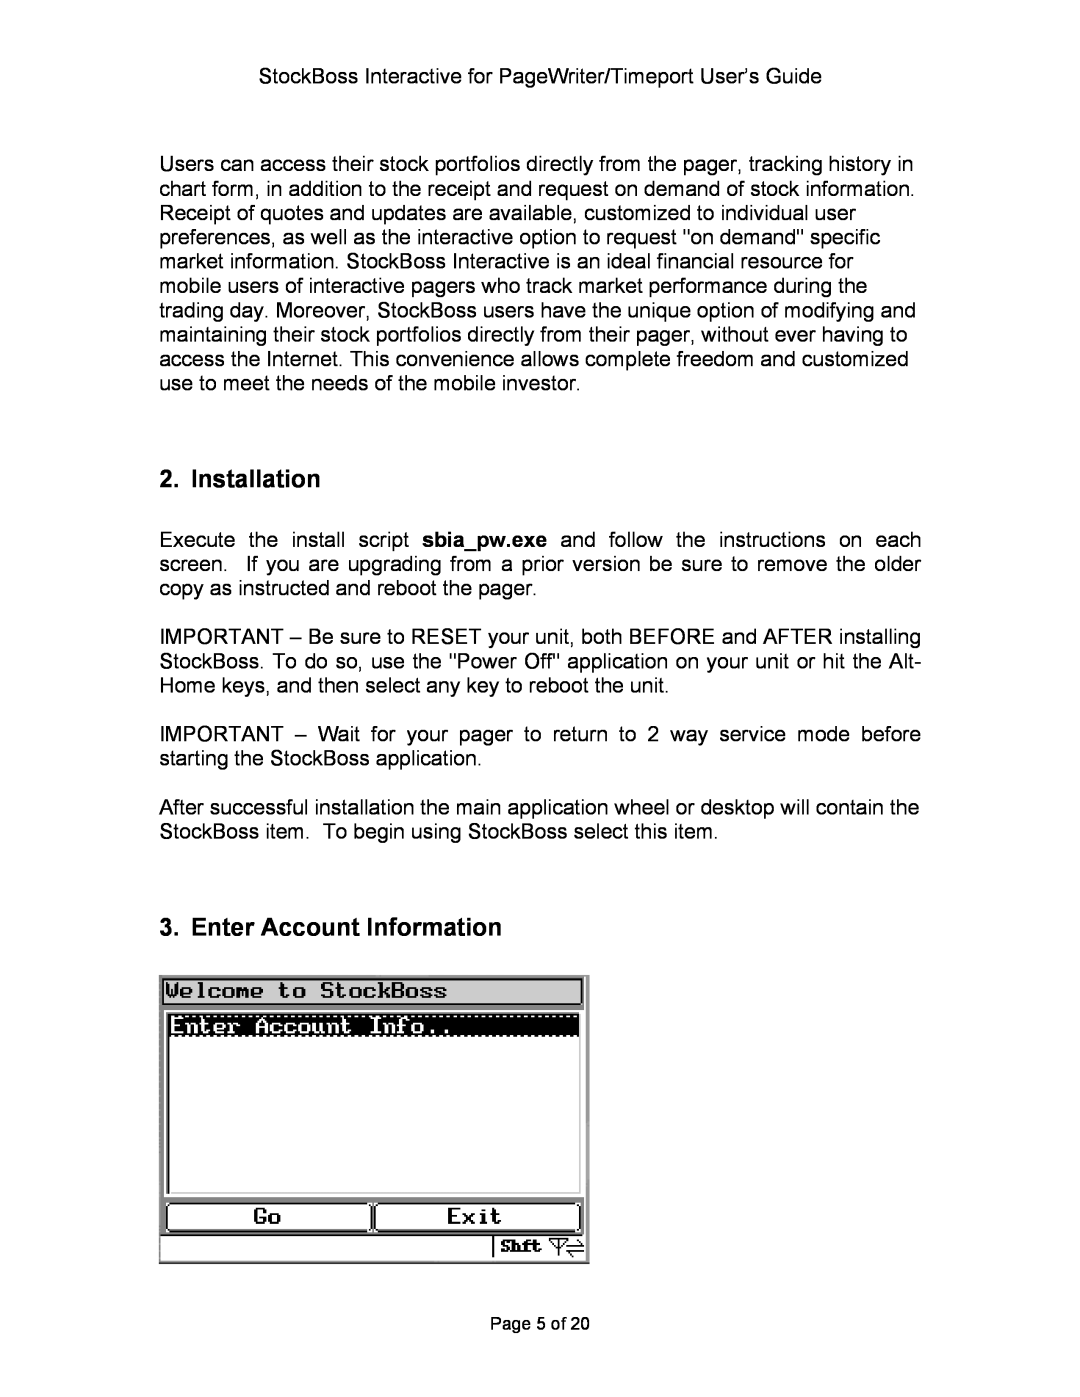 Motorola P930 Series manual Installation, Enter Account Information, Page 5 of 